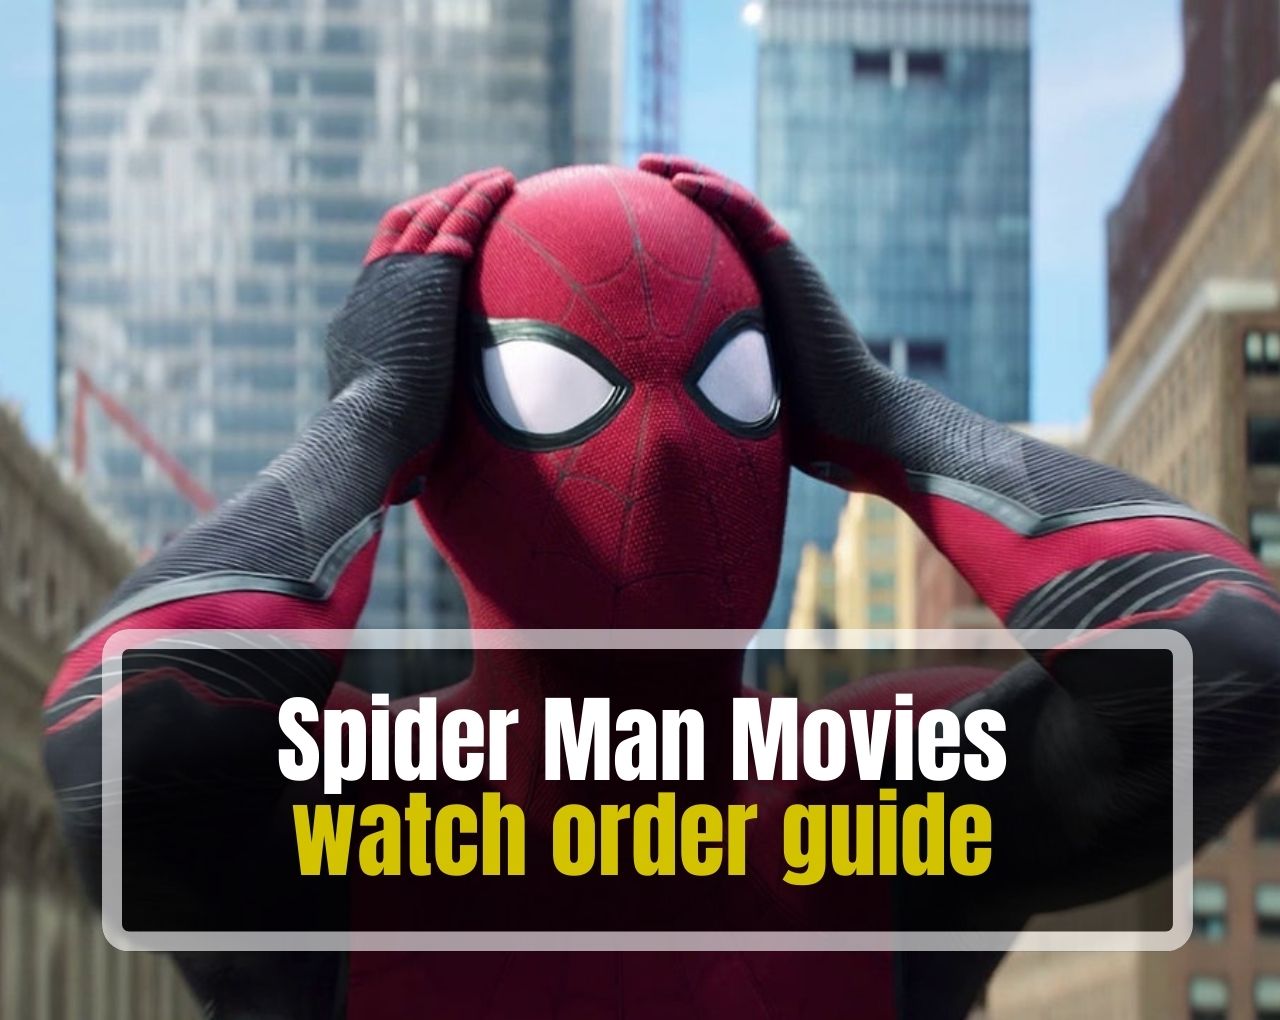 Spider Man Movies watch order guide